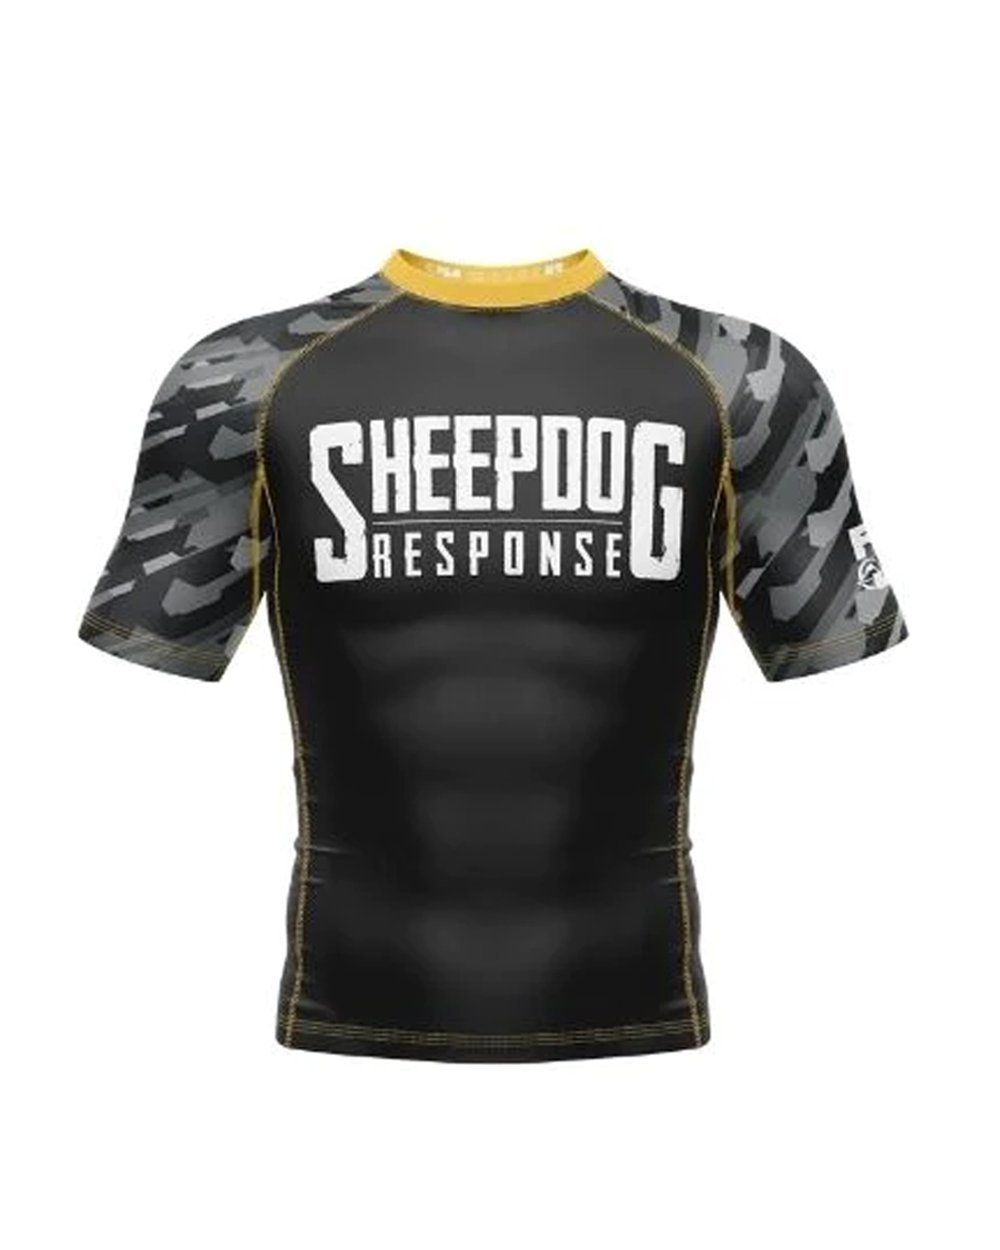 Sheepdog Response Rashguard by Fuji